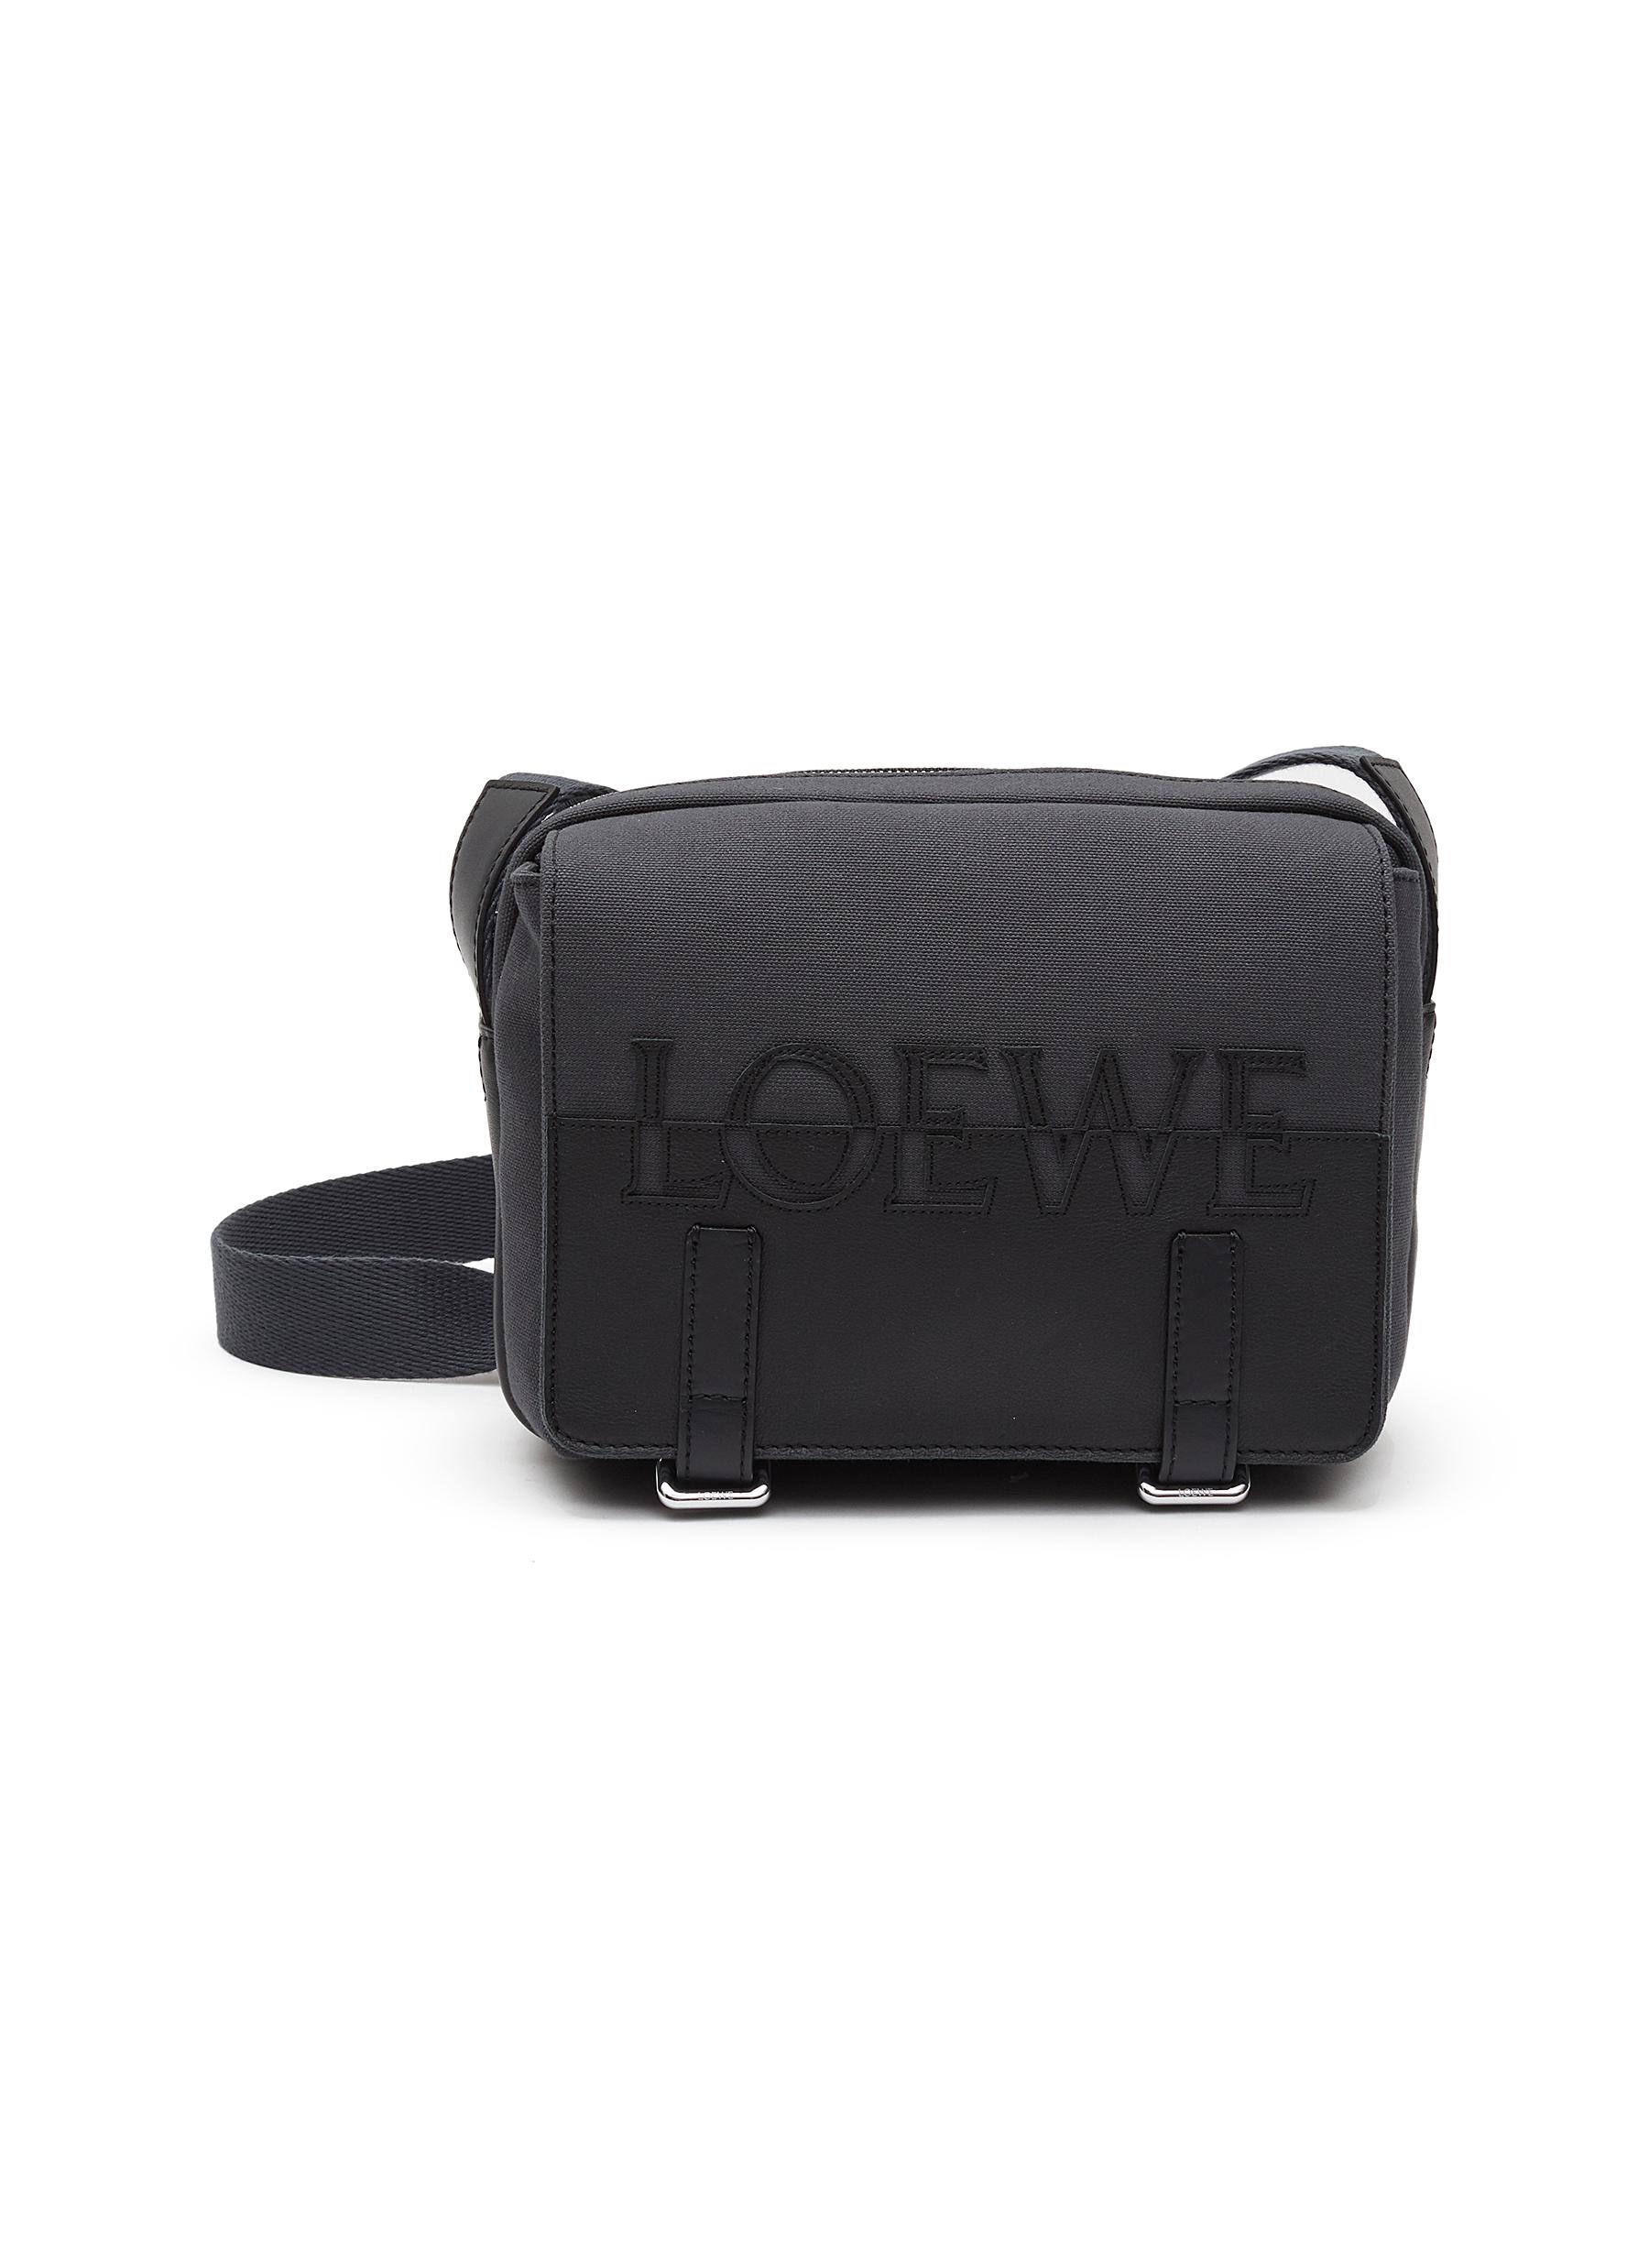 ‘Military XS' Leather Trim Canvas Messenger Bag